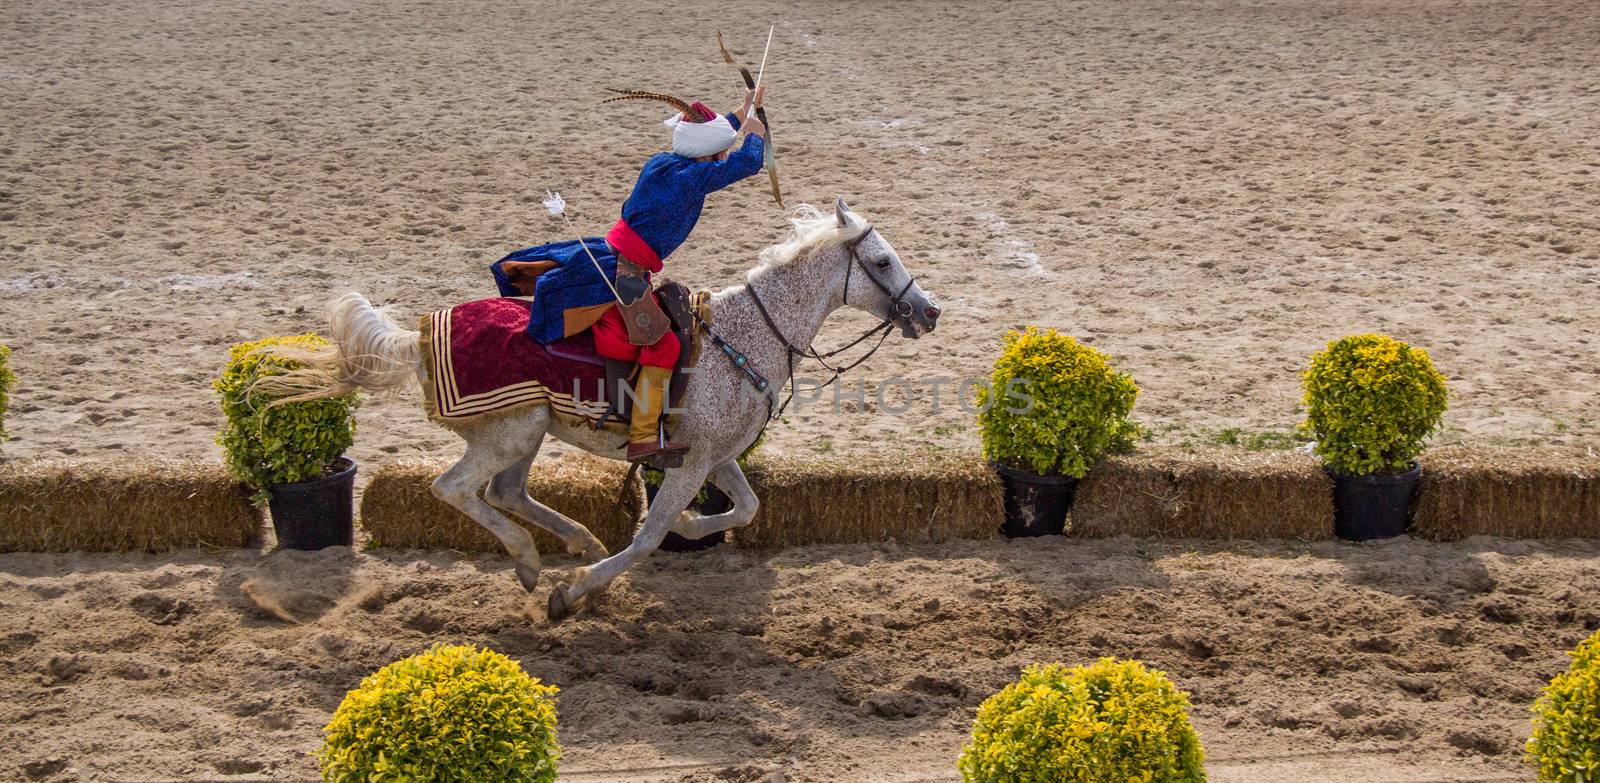 Ottoman archer riding and shooting on horseback